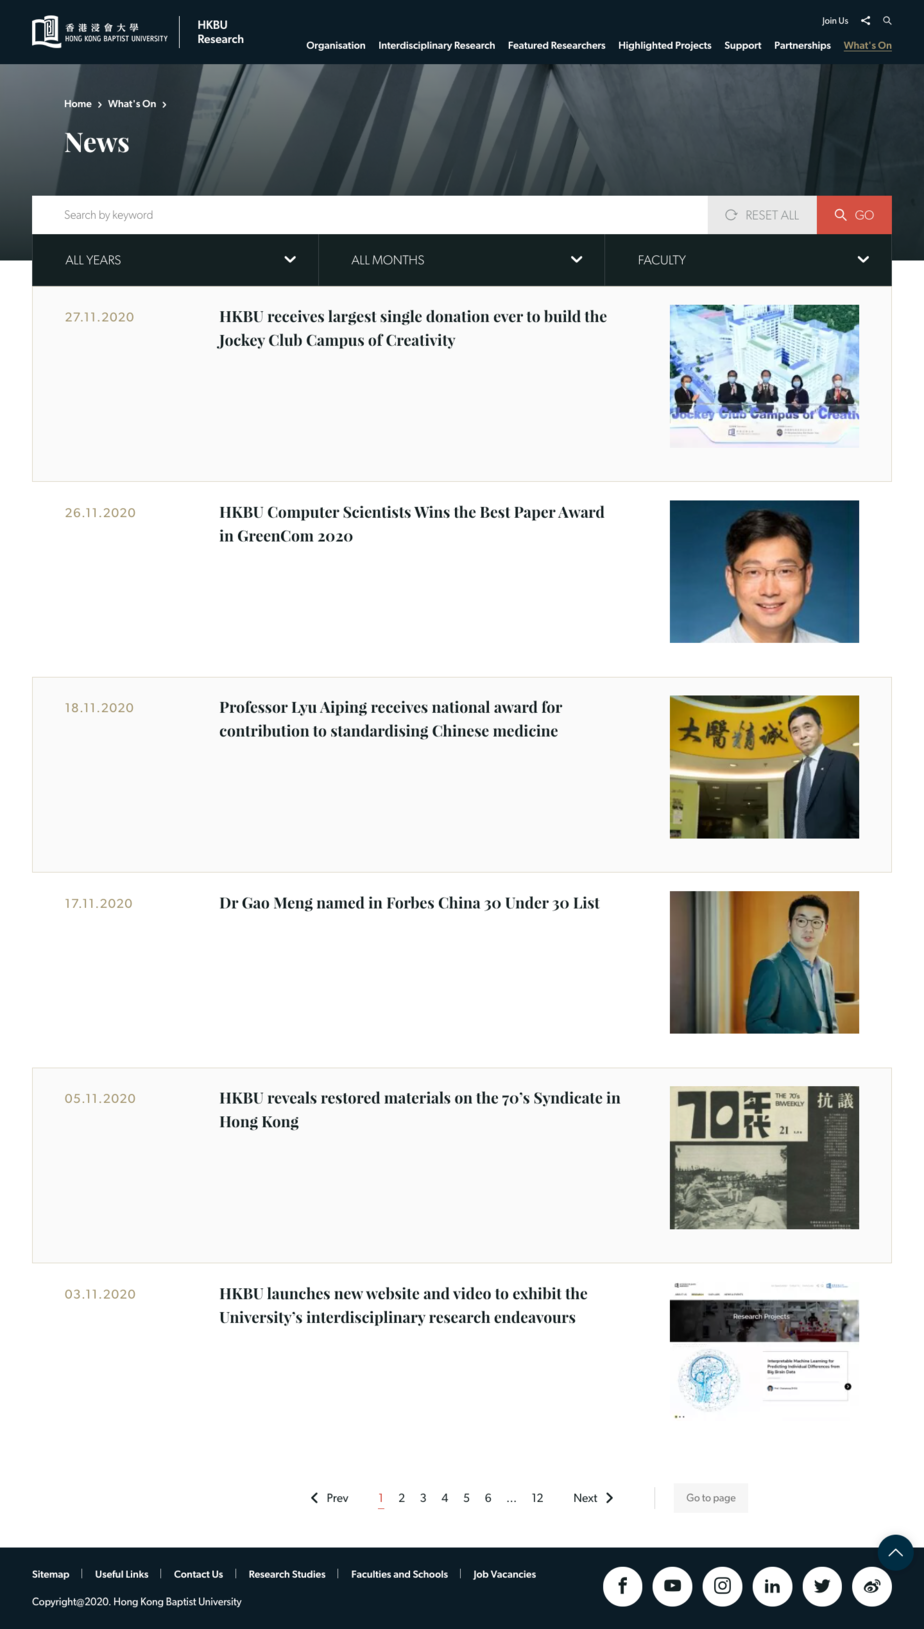 Hong Kong Baptist University website screenshot for desktop version 5 of 5